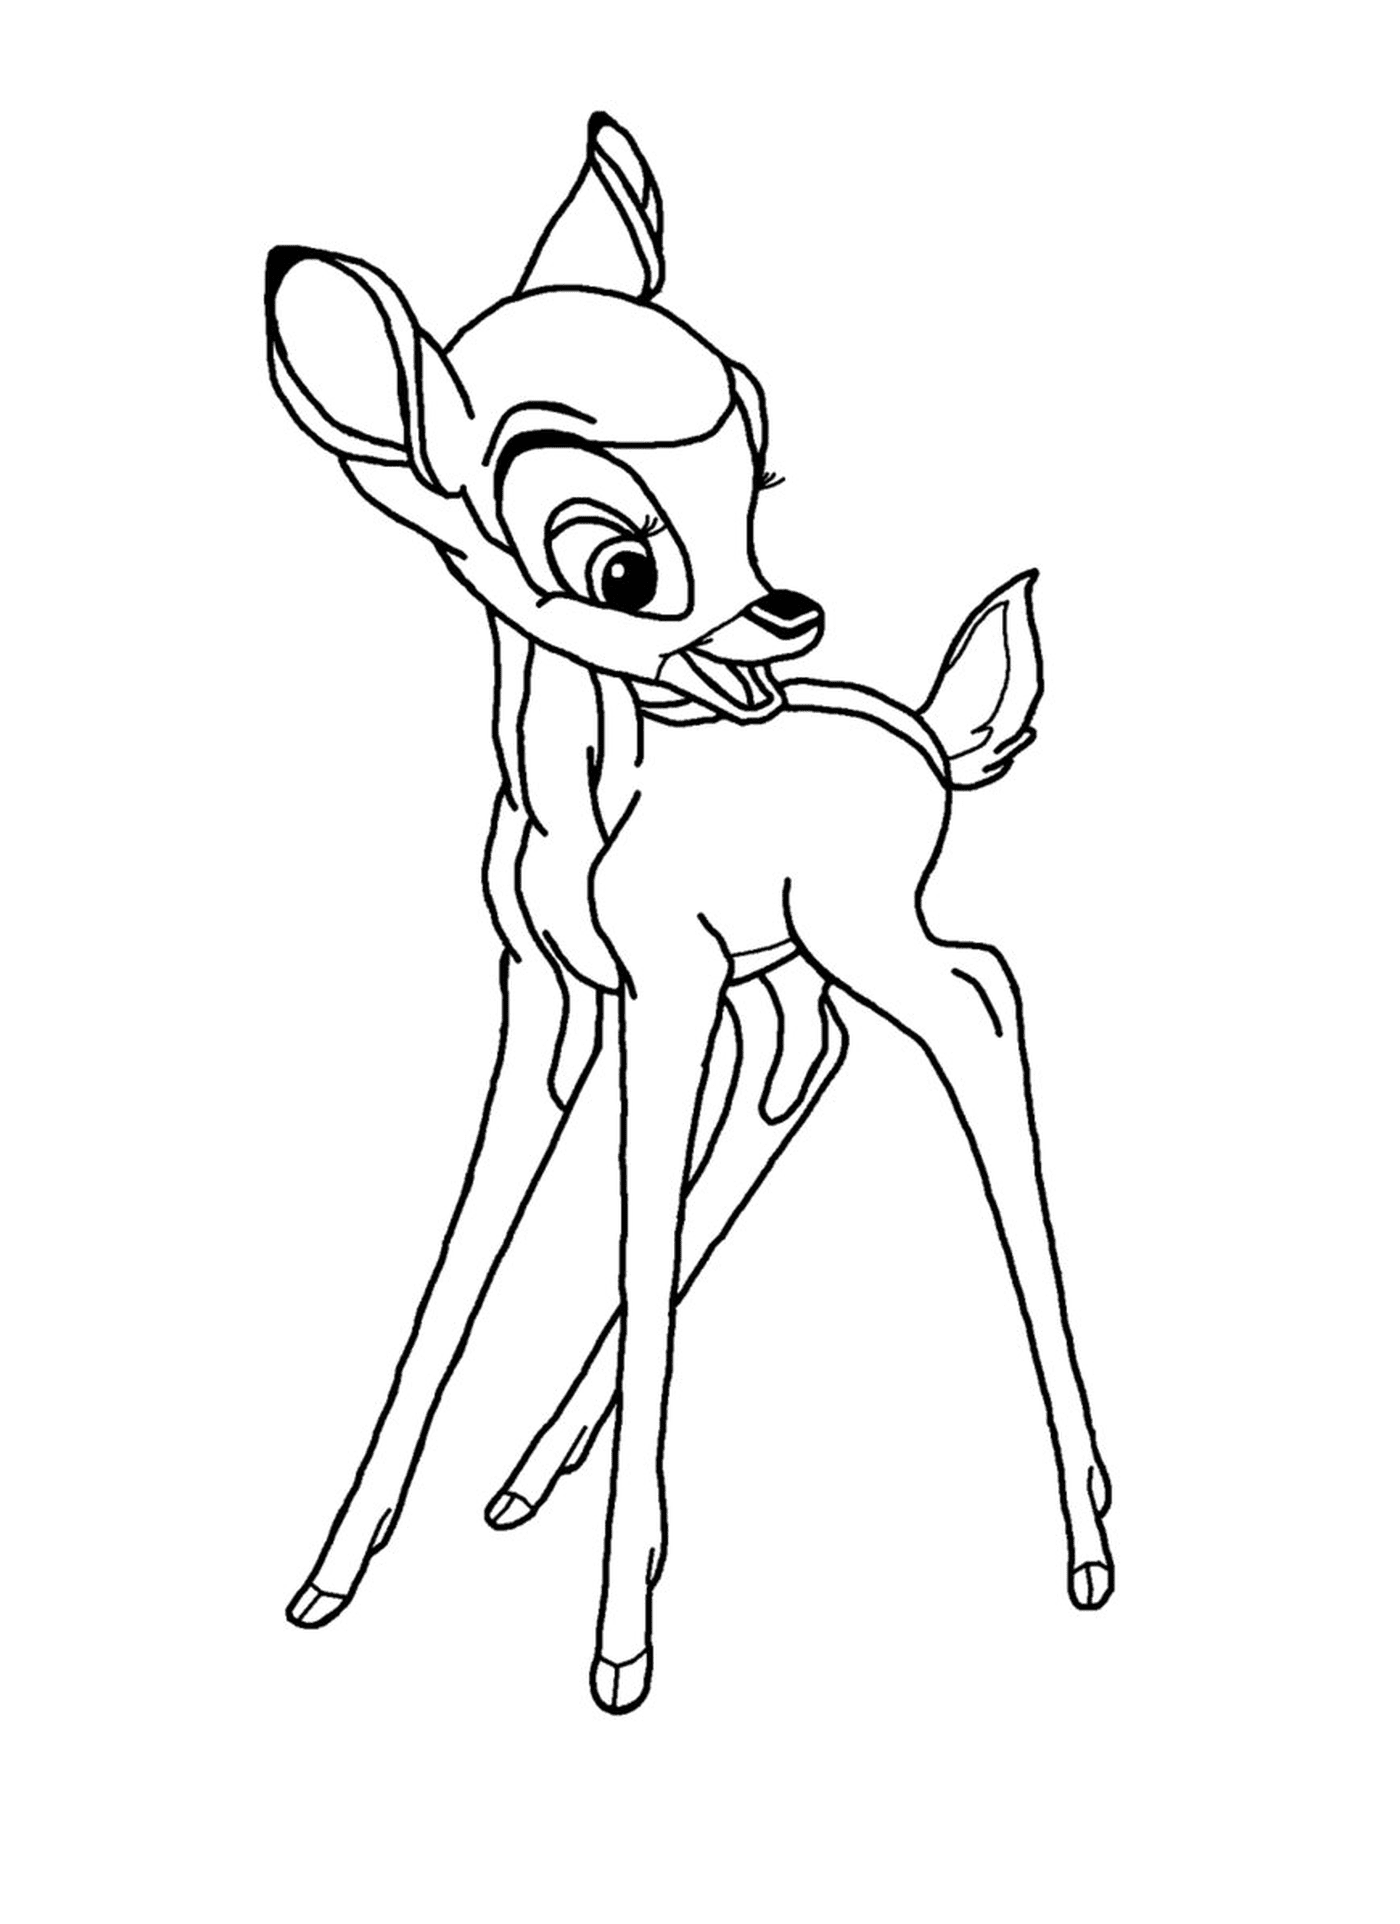  A deer 